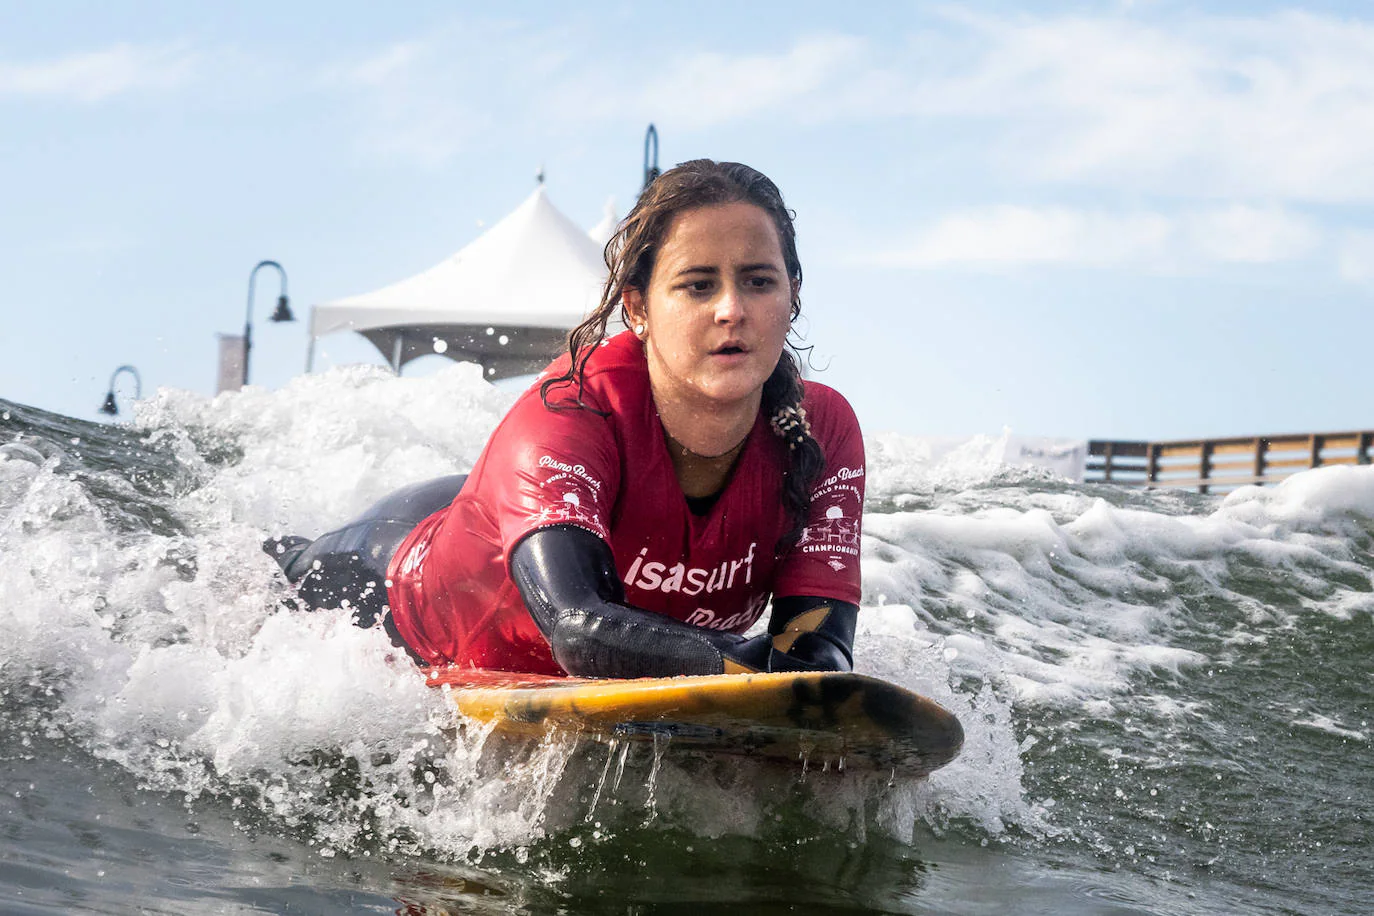 Sarah won silver at the Para-Surfing Championships in California